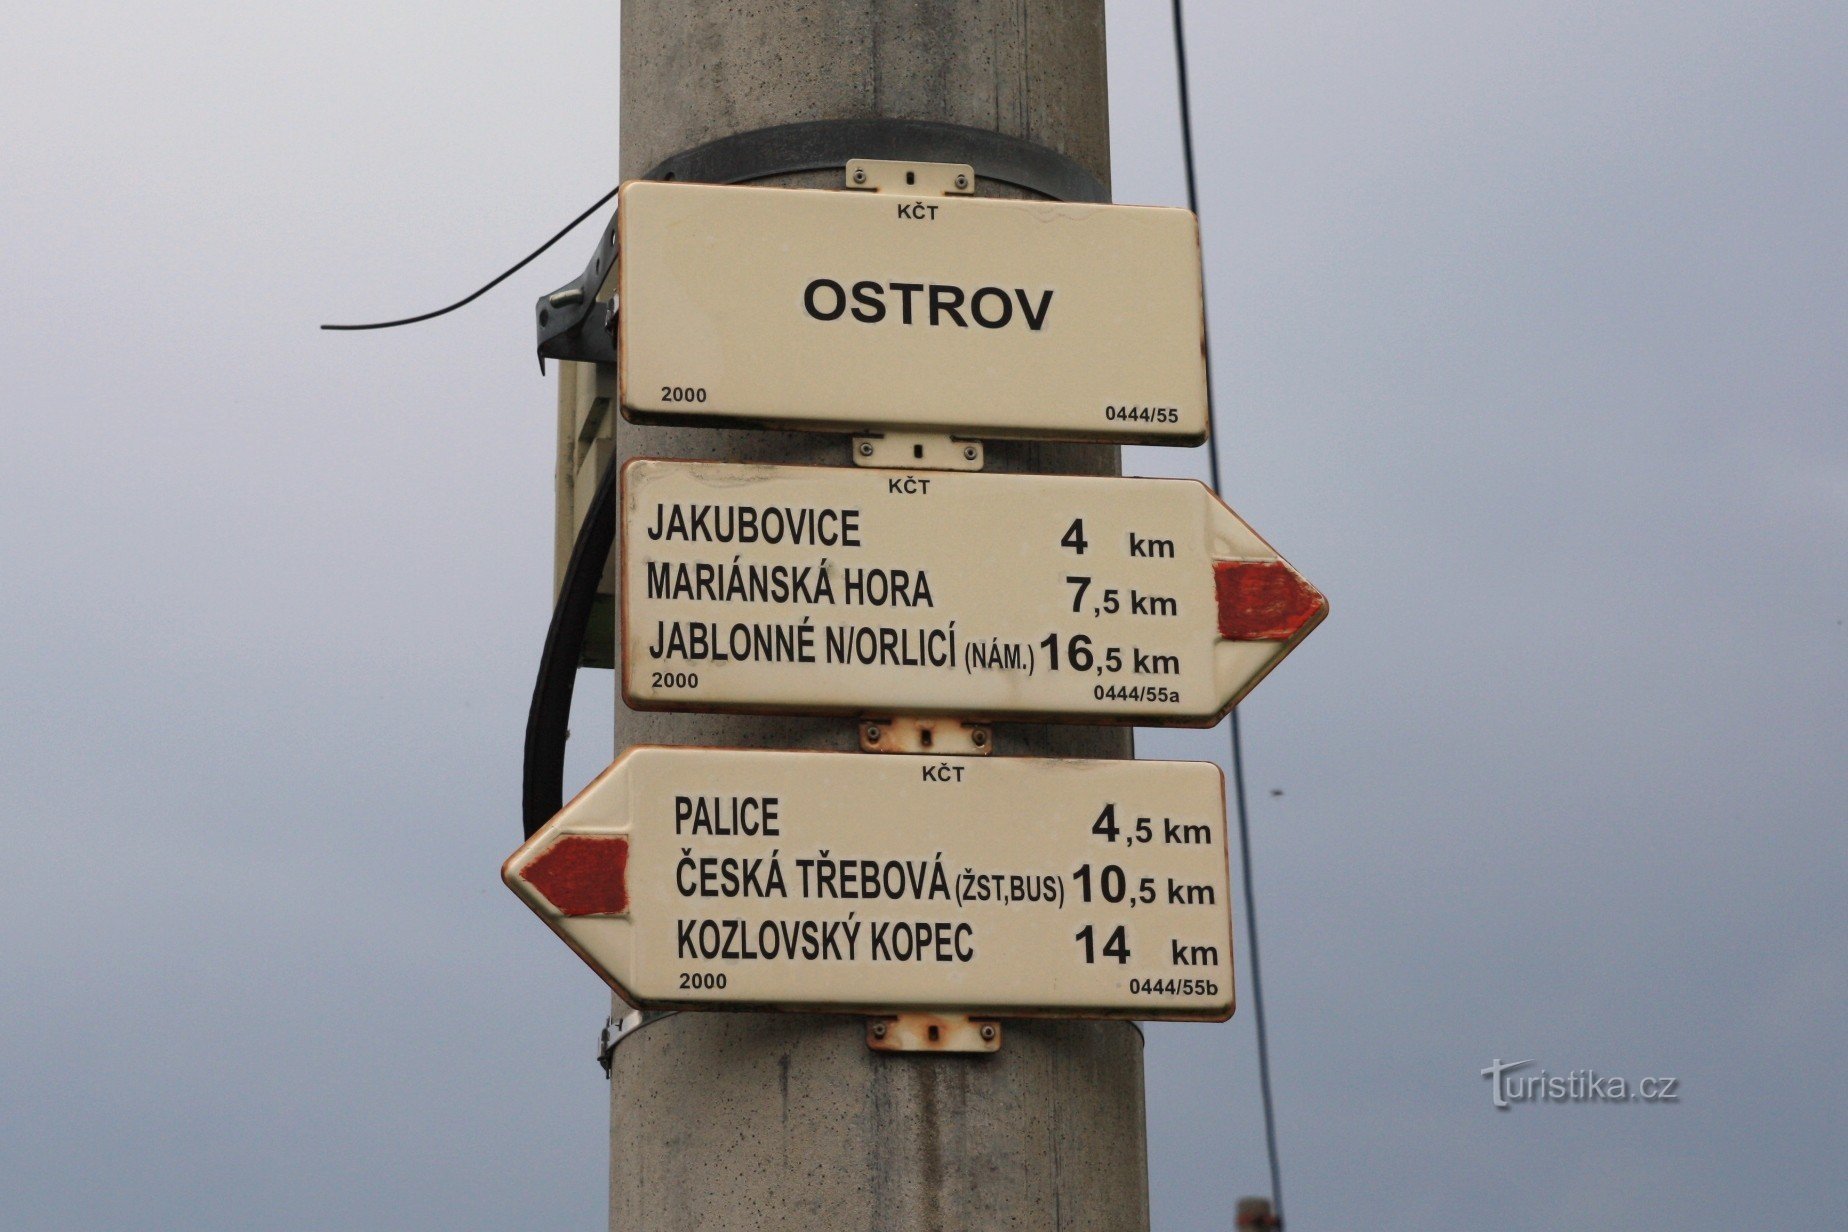 Encruzilhada turística Ostrov